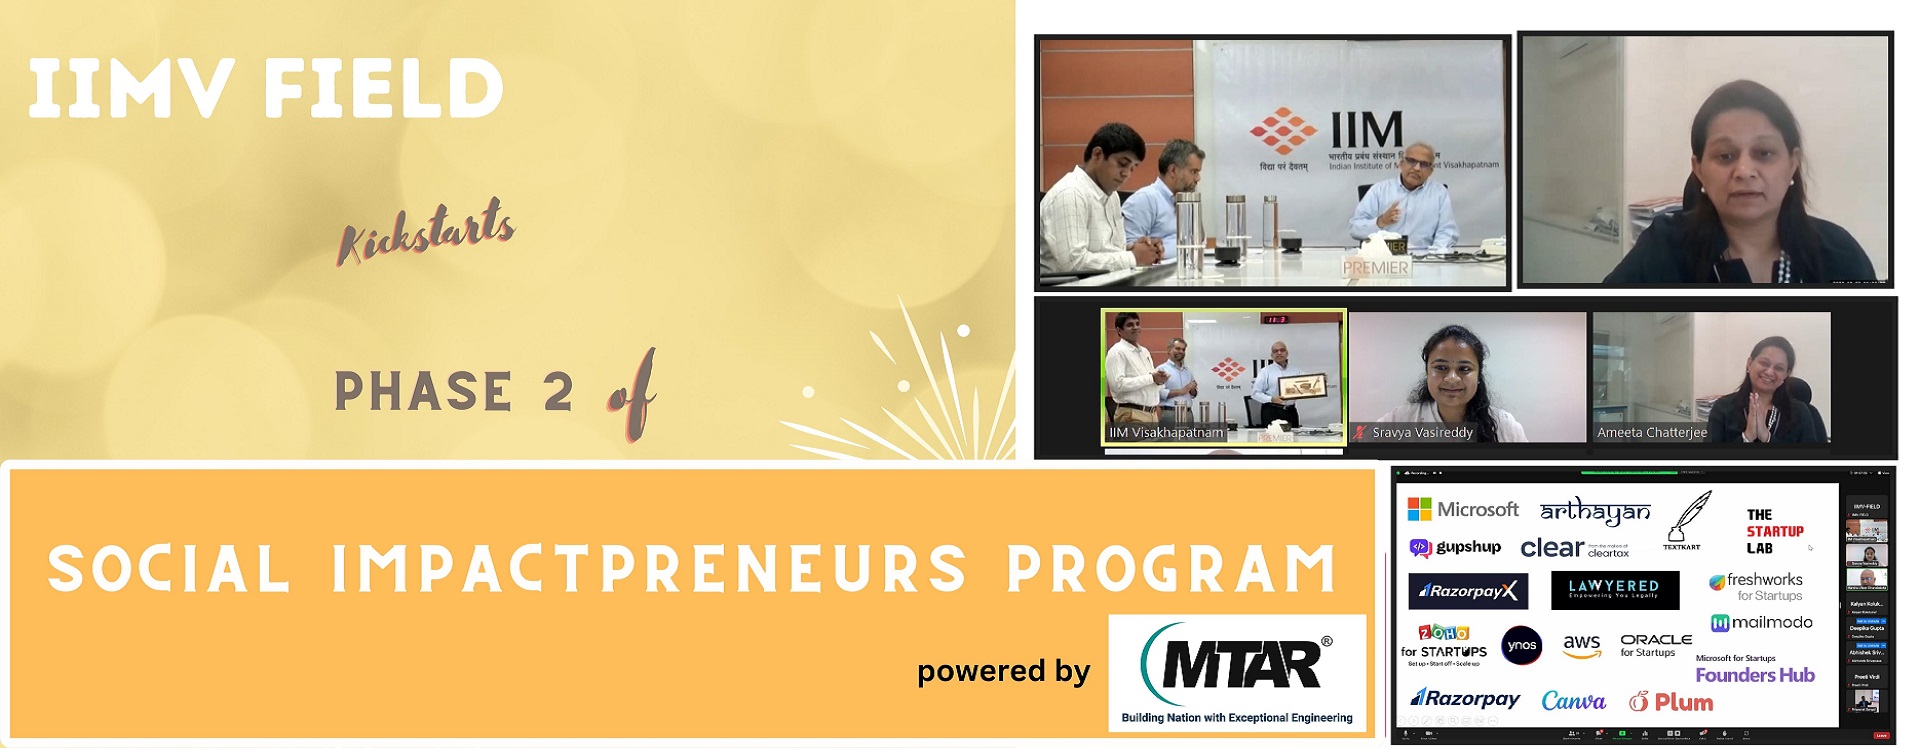 IIMV FIELD inaugurated its flagship Social Impactpreneurs Program